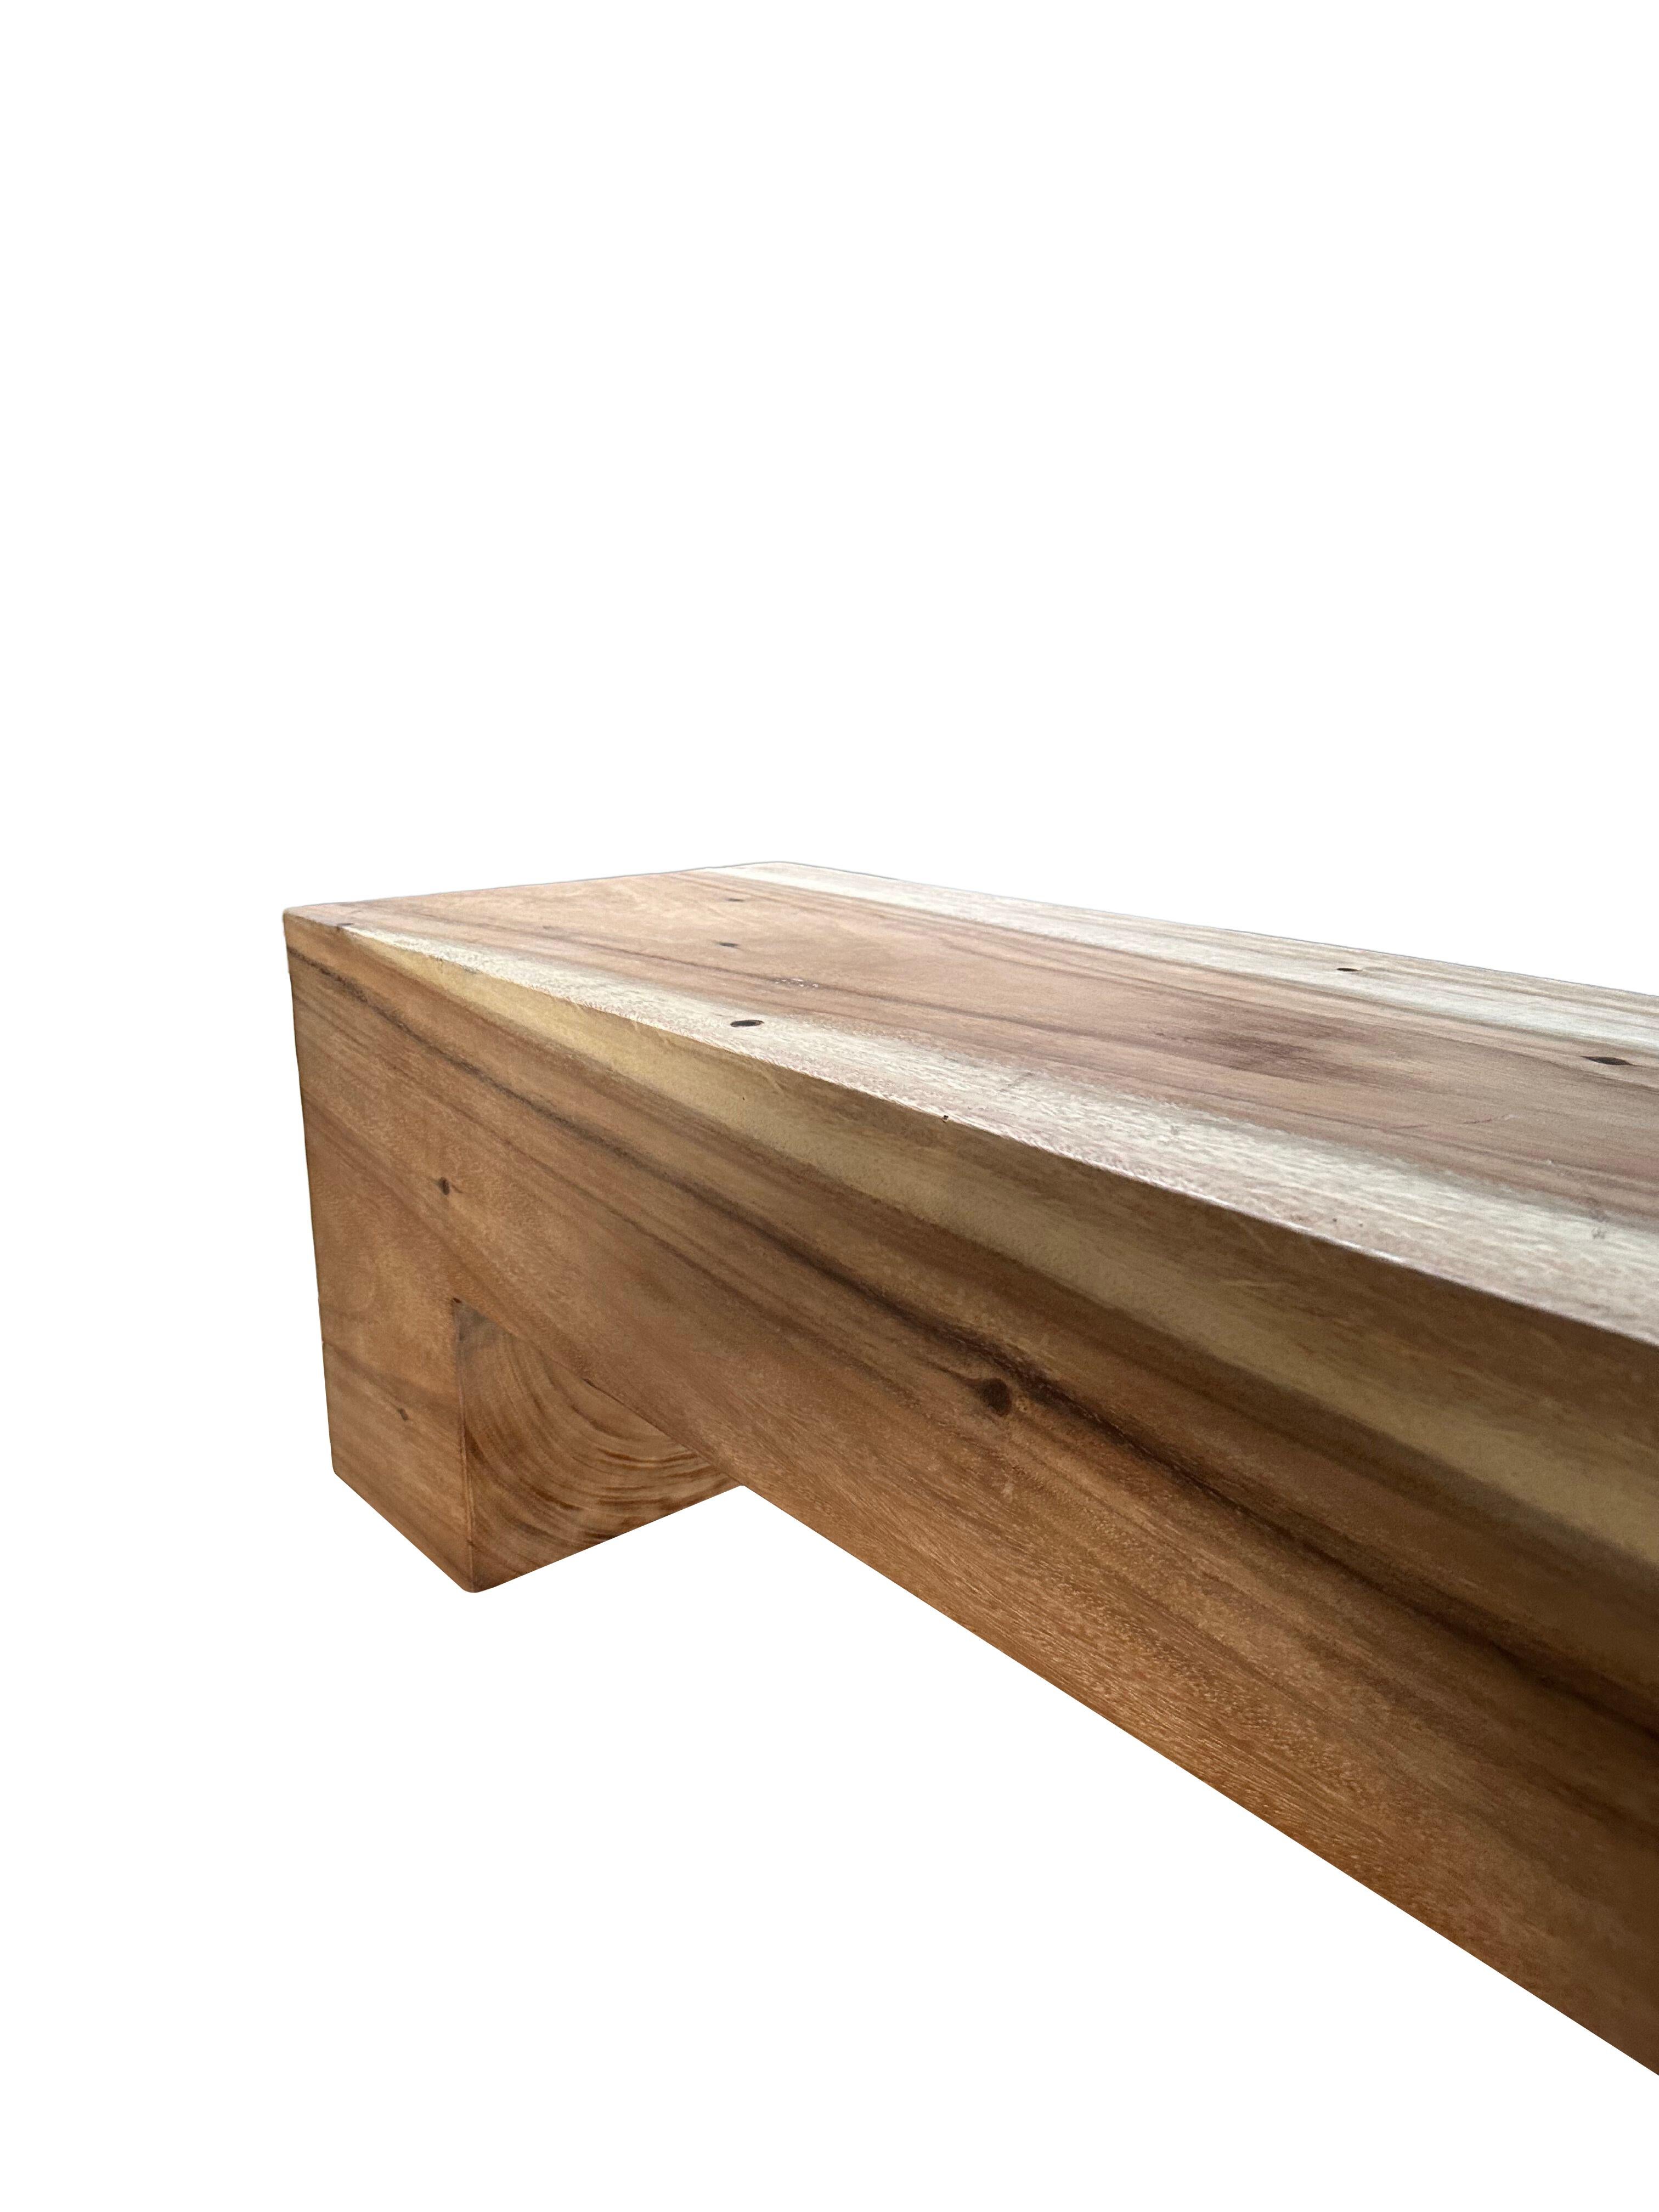 Hardwood Very Long Sculptural Solid Suar Wood Bench Modern Organic For Sale